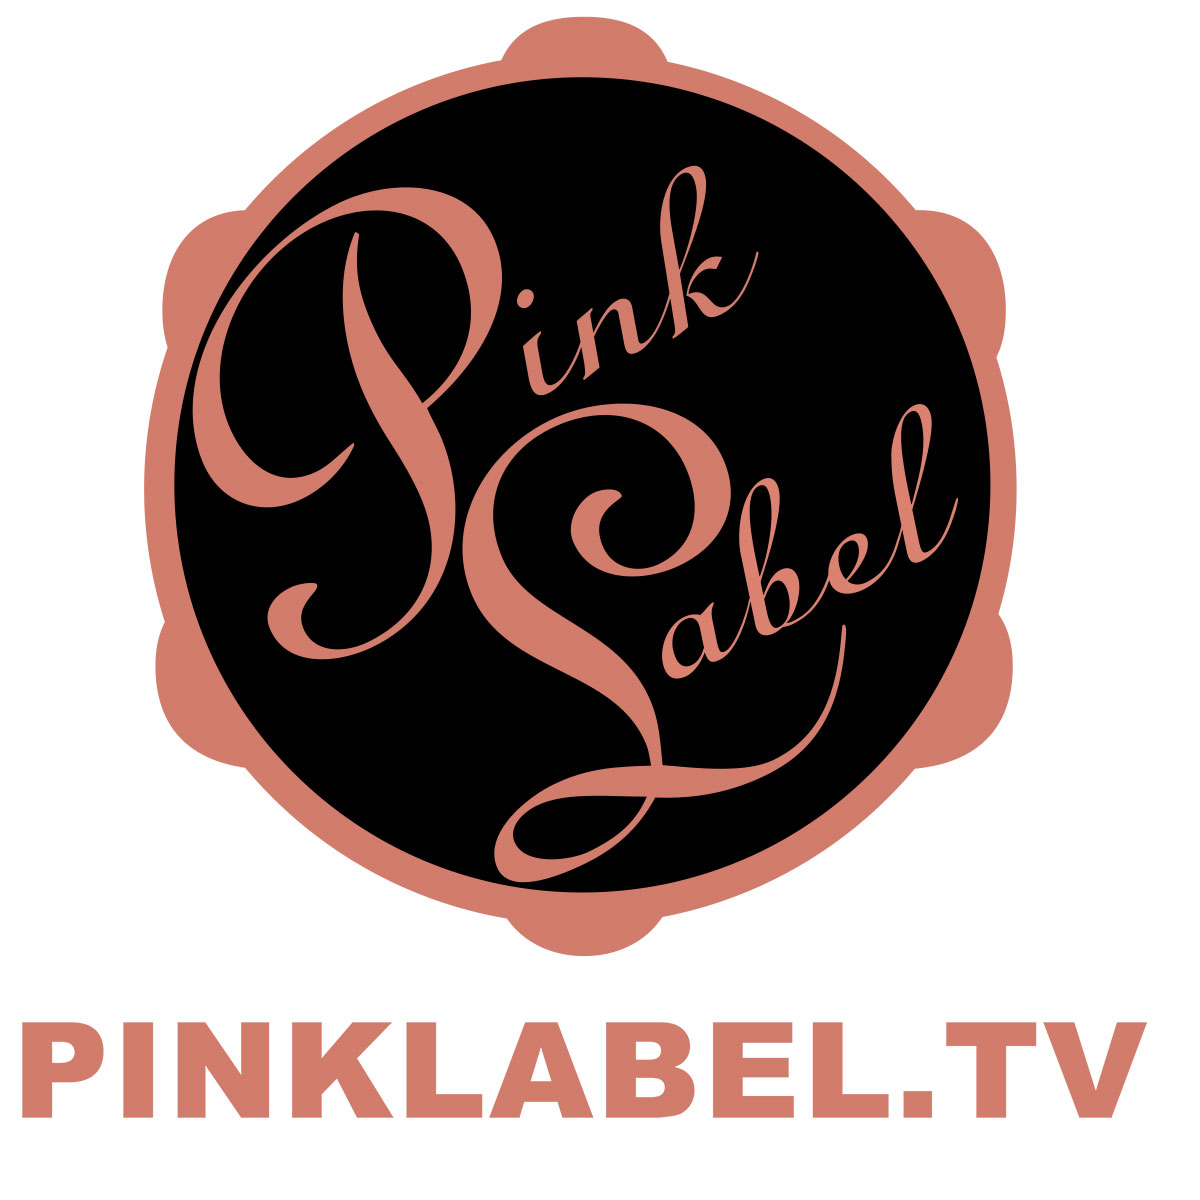 Pink label tv